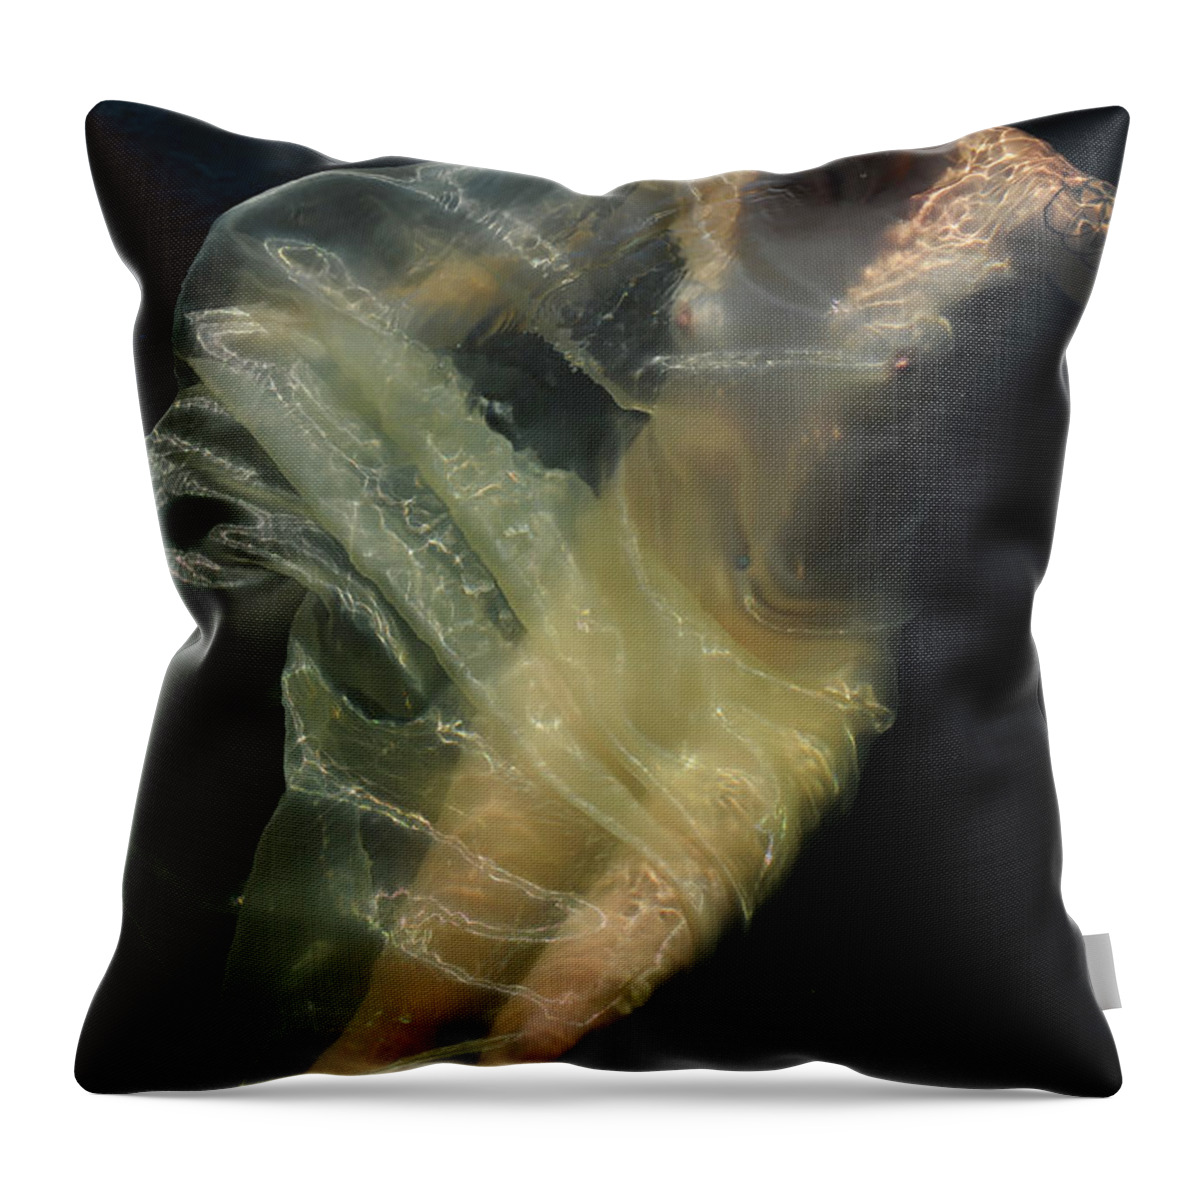  Throw Pillow featuring the photograph Celestial Body by Adele Aron Greenspun